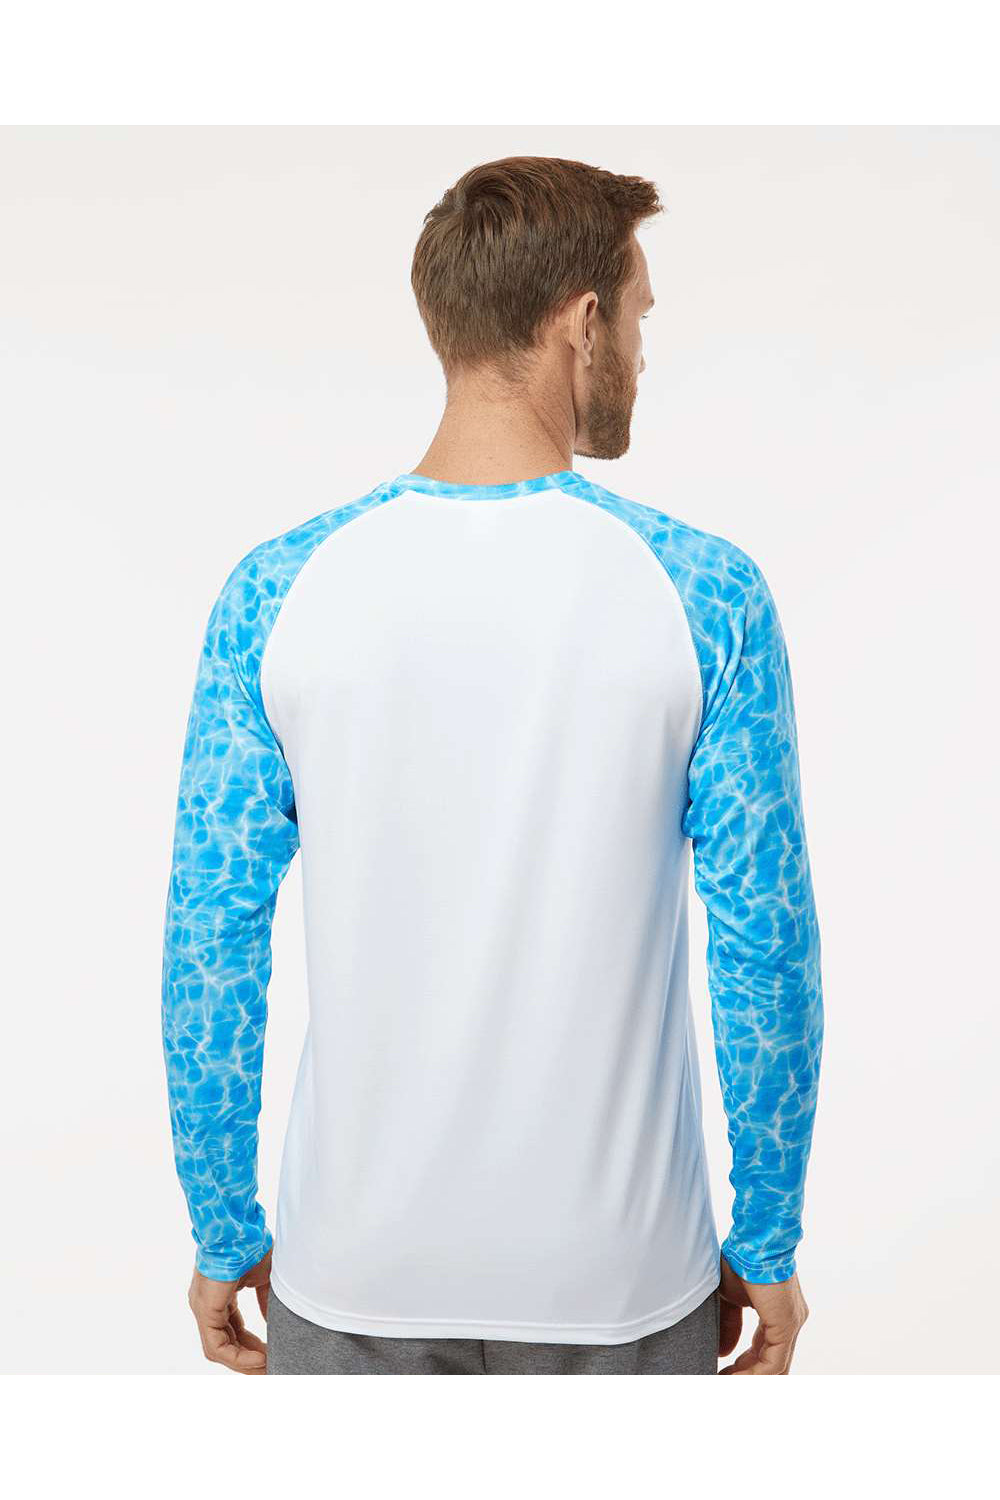 Paragon 231 Mens Panama Colorblocked Long Sleeve Crewneck T-Shirt Blue Water Model Back